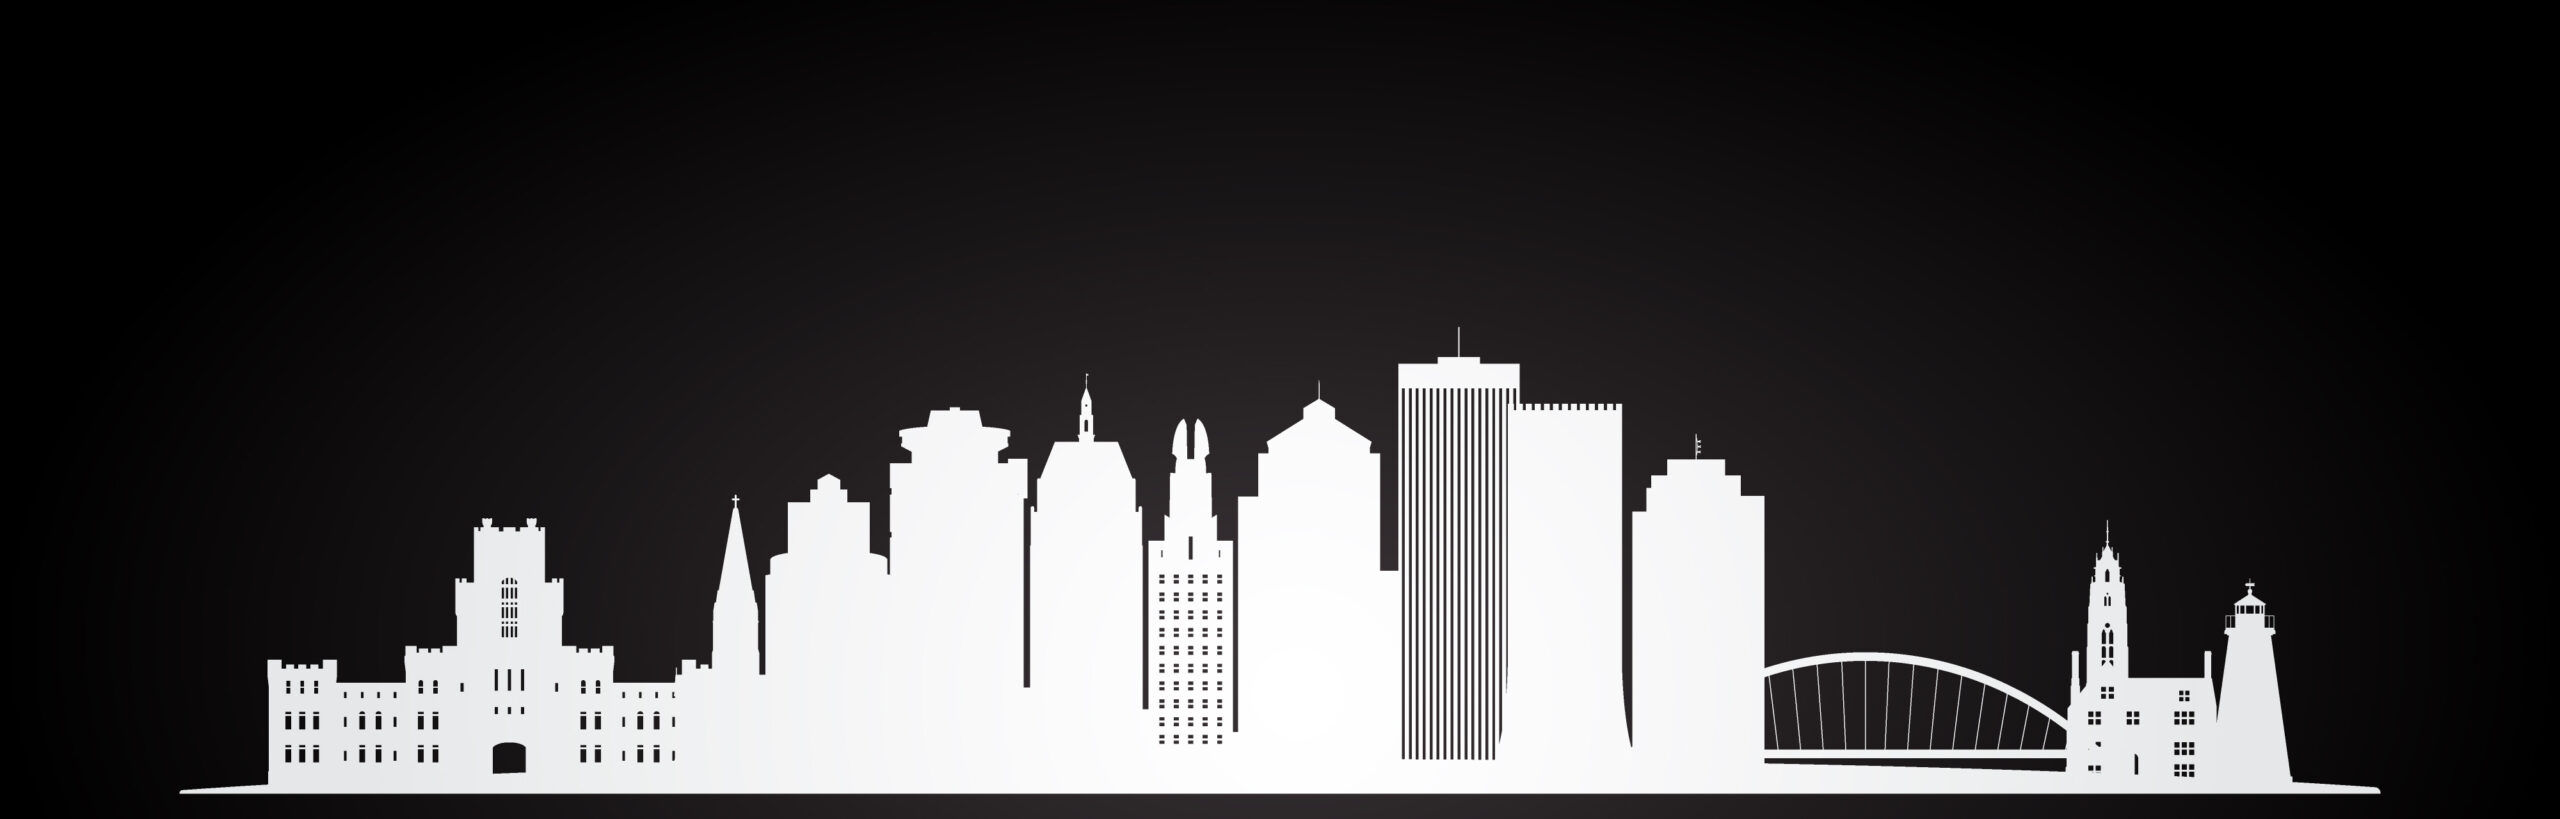 An illustration of Rochester, NY skyline